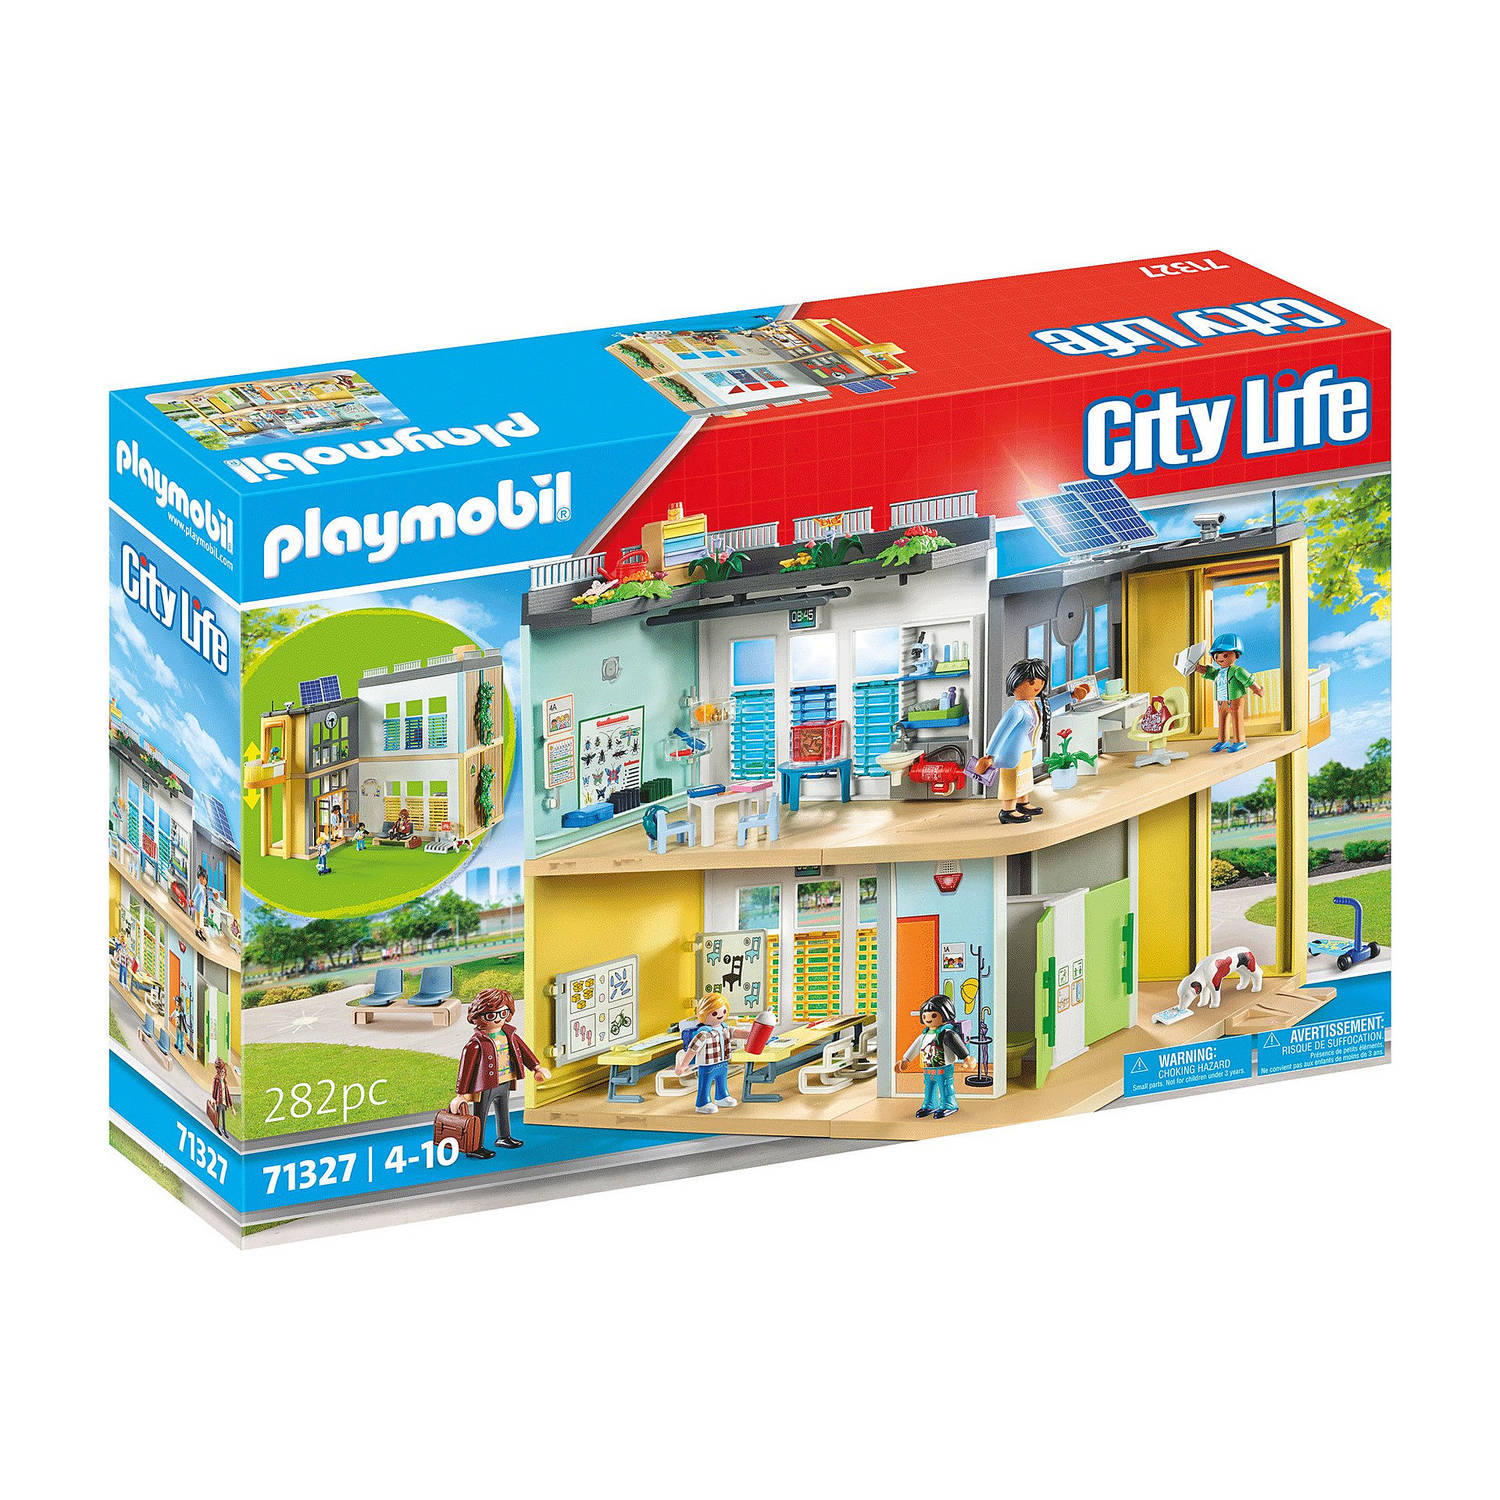 Playmobil City Life Large School